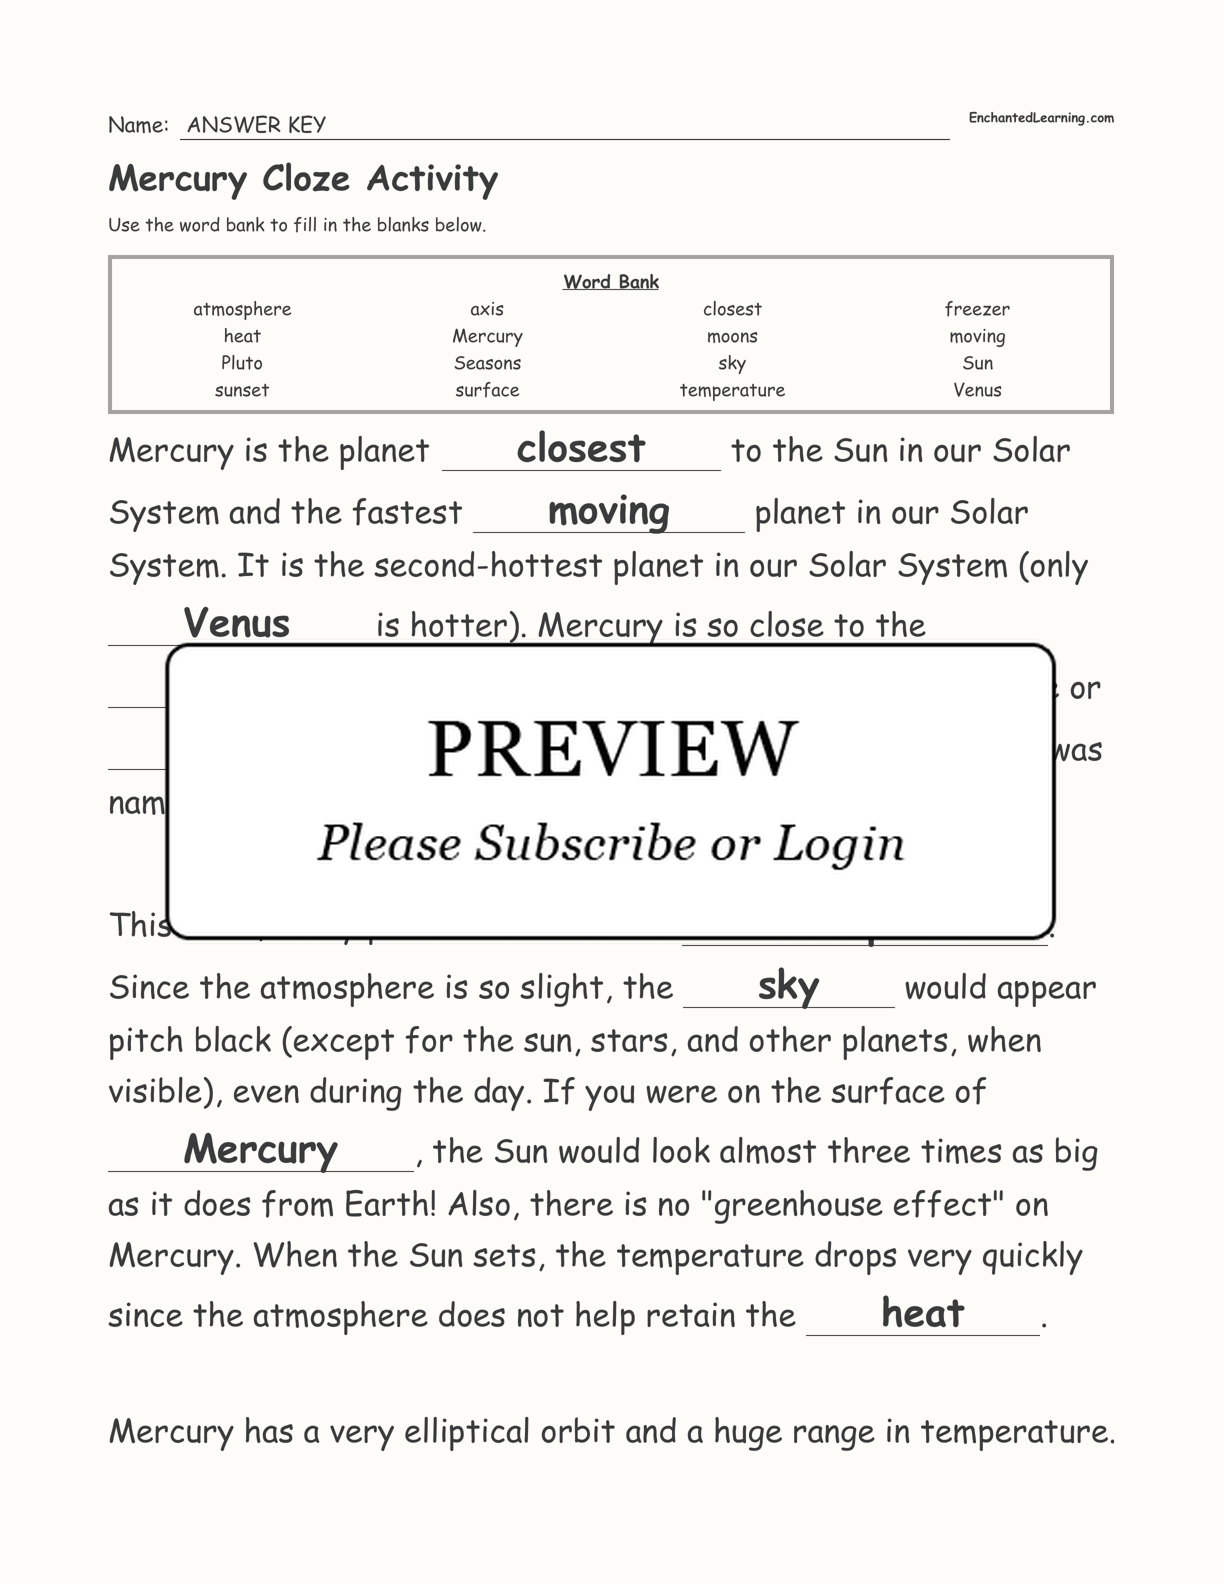 Mercury Cloze Activity interactive worksheet page 3